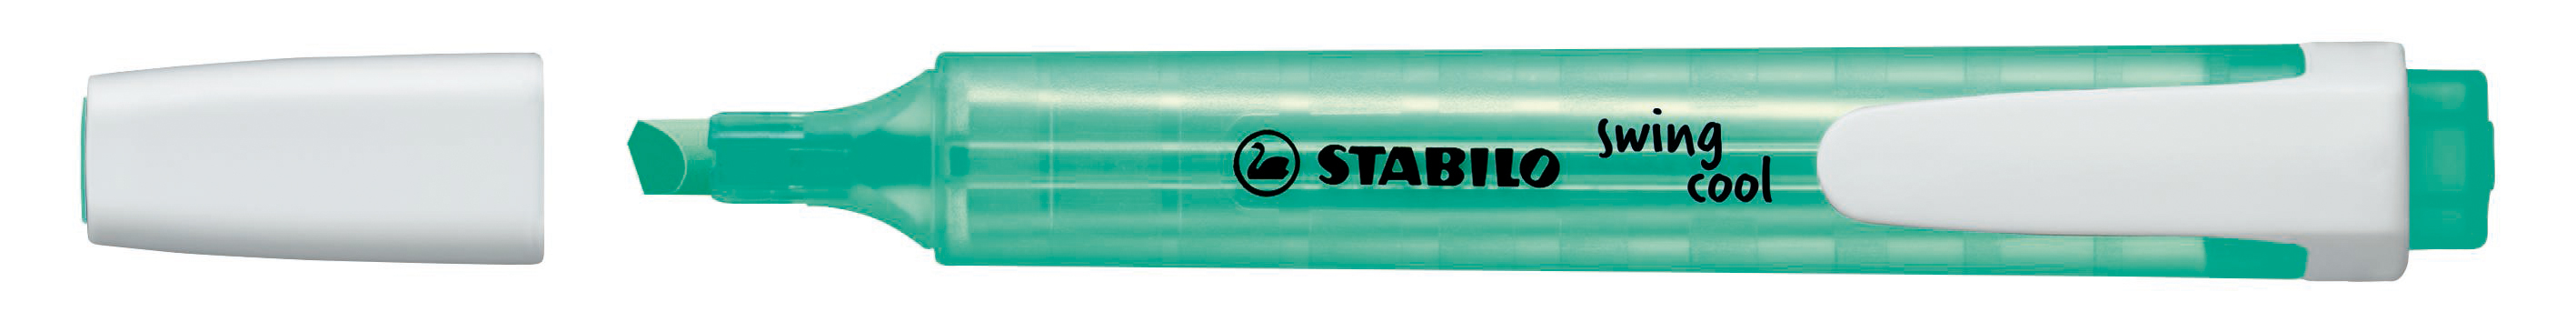 STABILO Swing Cool Marker 1-4mm 275/51 turquoise